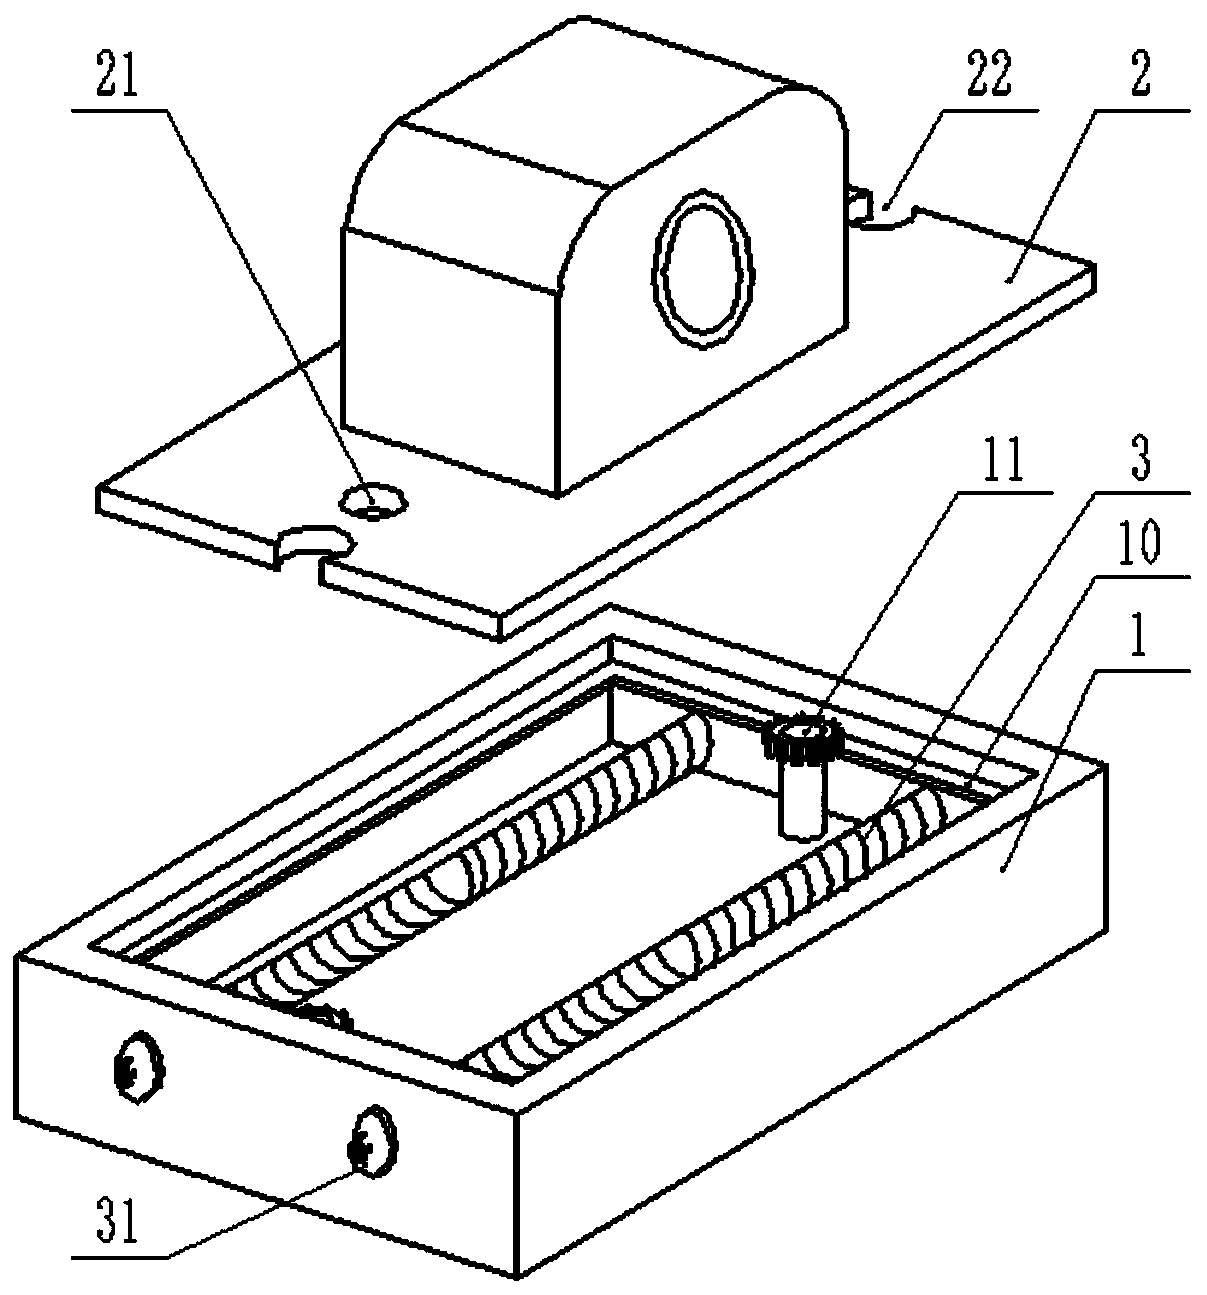 Bearing base horizontal positioning mechanism and horizontal positioning method